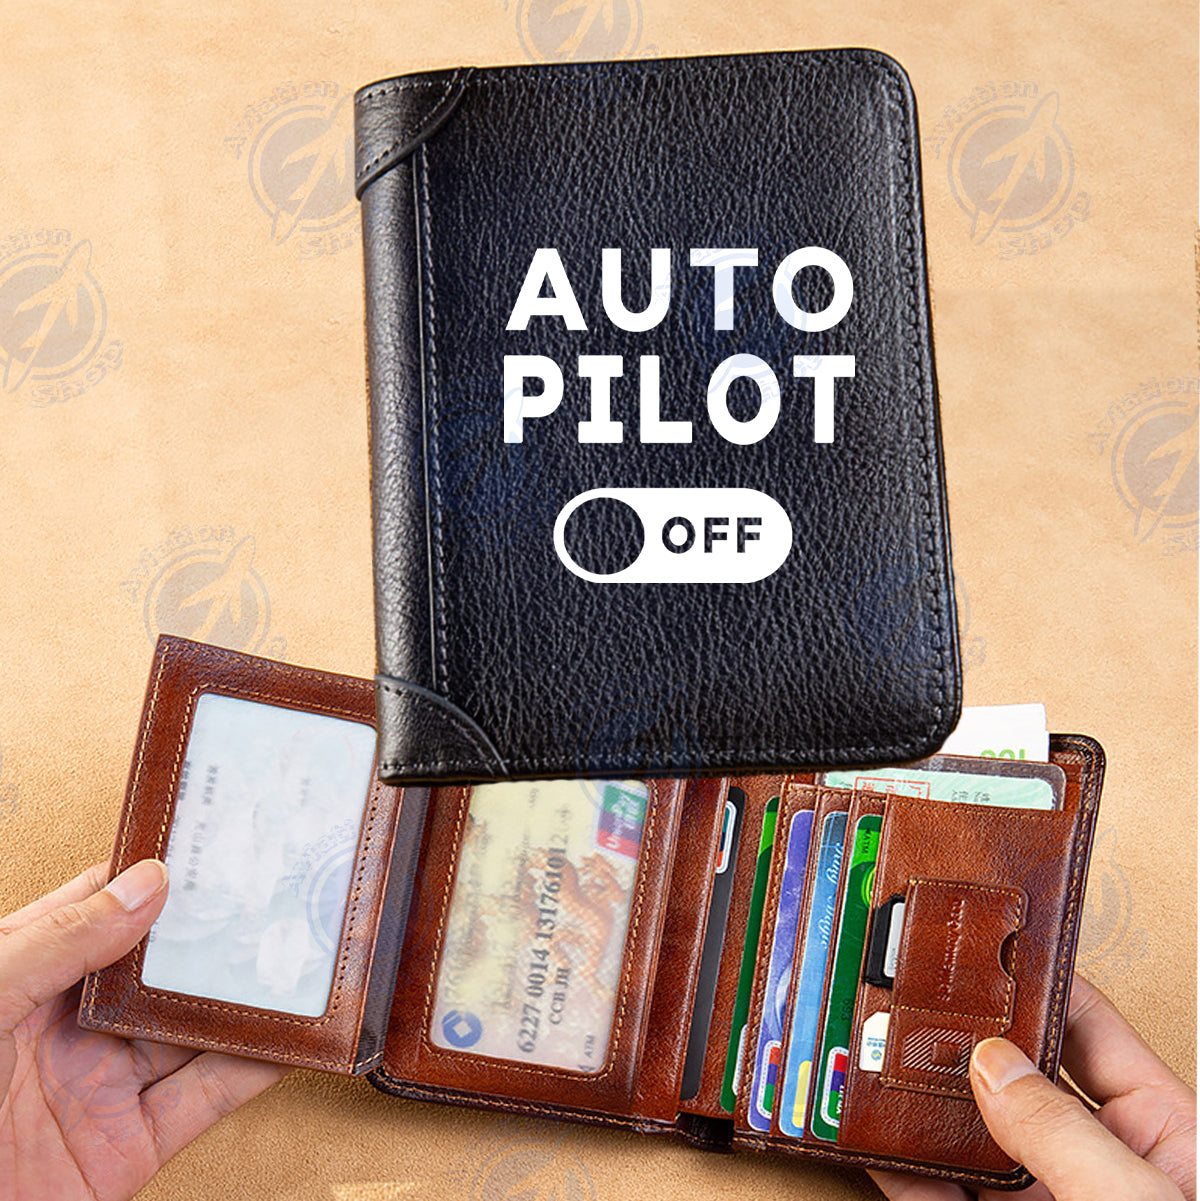 Auto Pilot Off Designed Leather Wallets